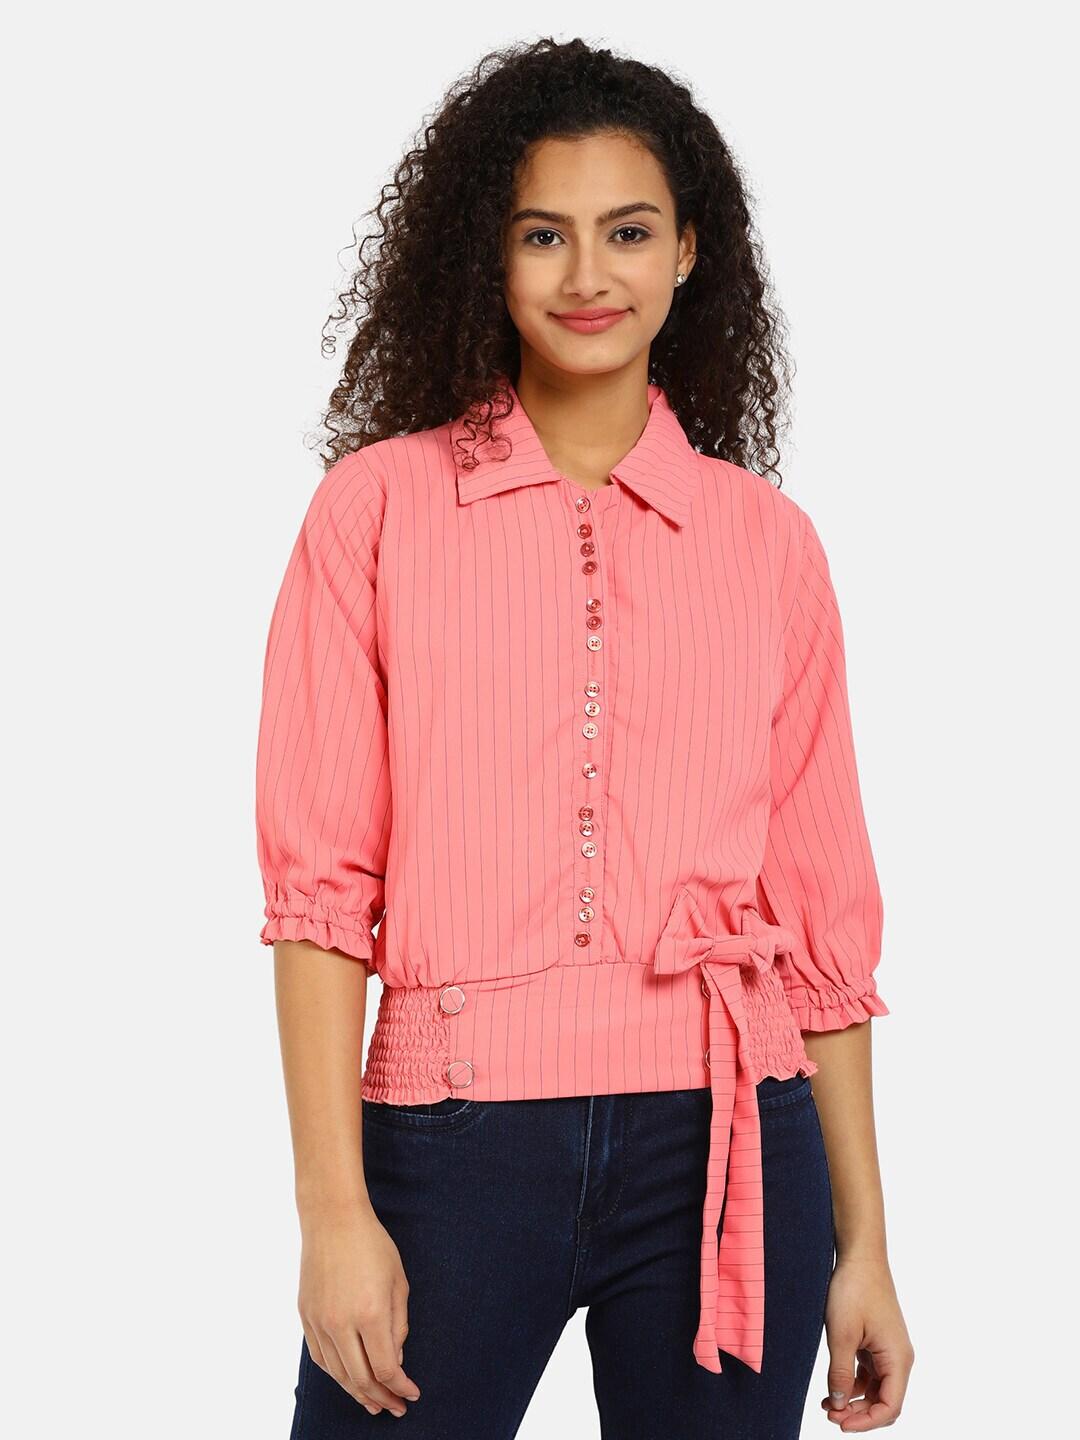 v-mart peach-coloured striped shirt style top